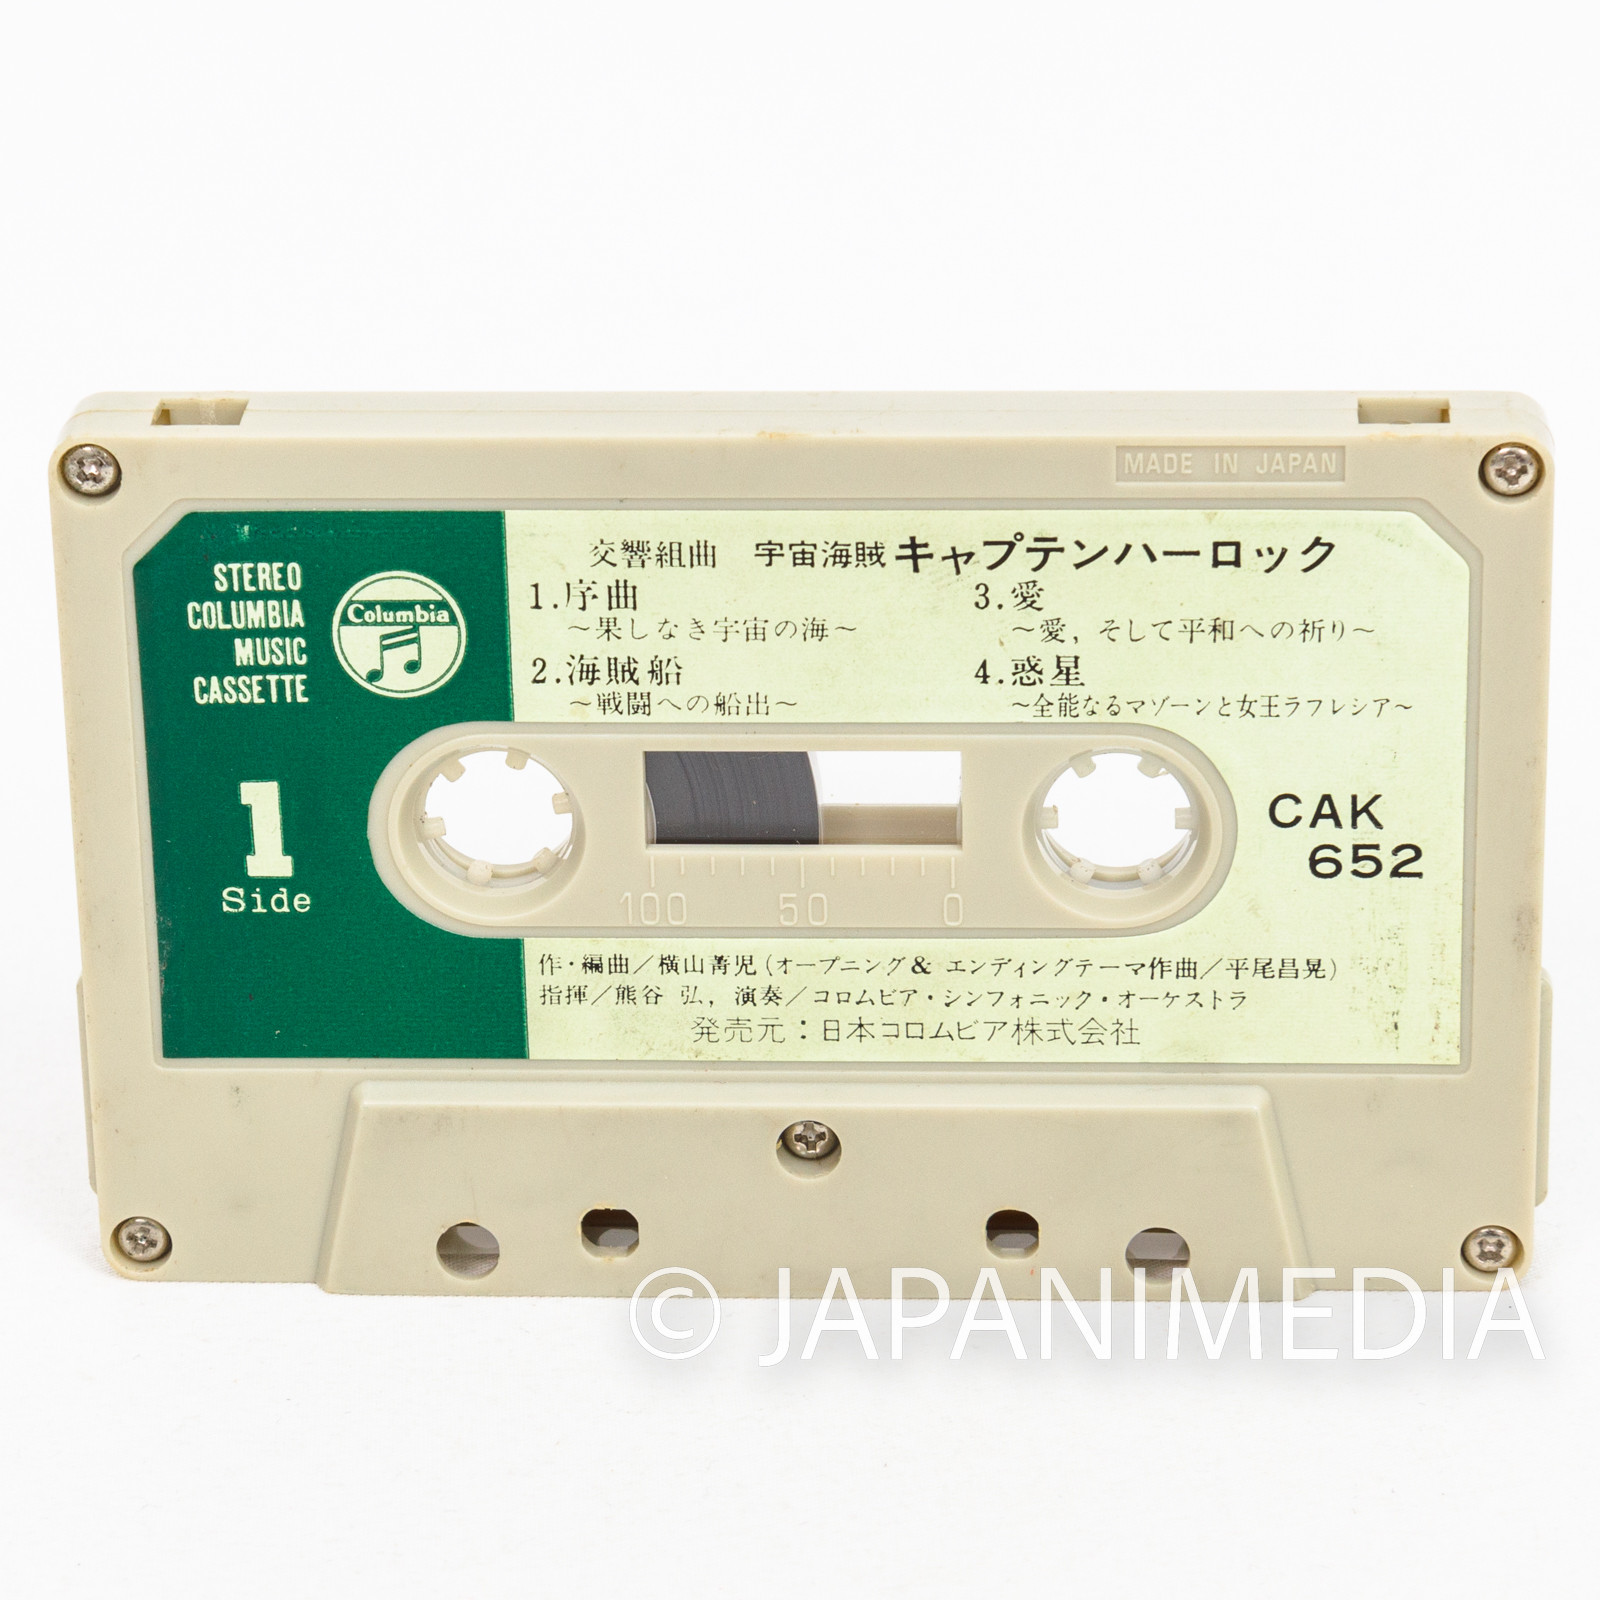 Space Pirate Captain Harlock Symphonic Suite Music Cassette Tape CAK-652